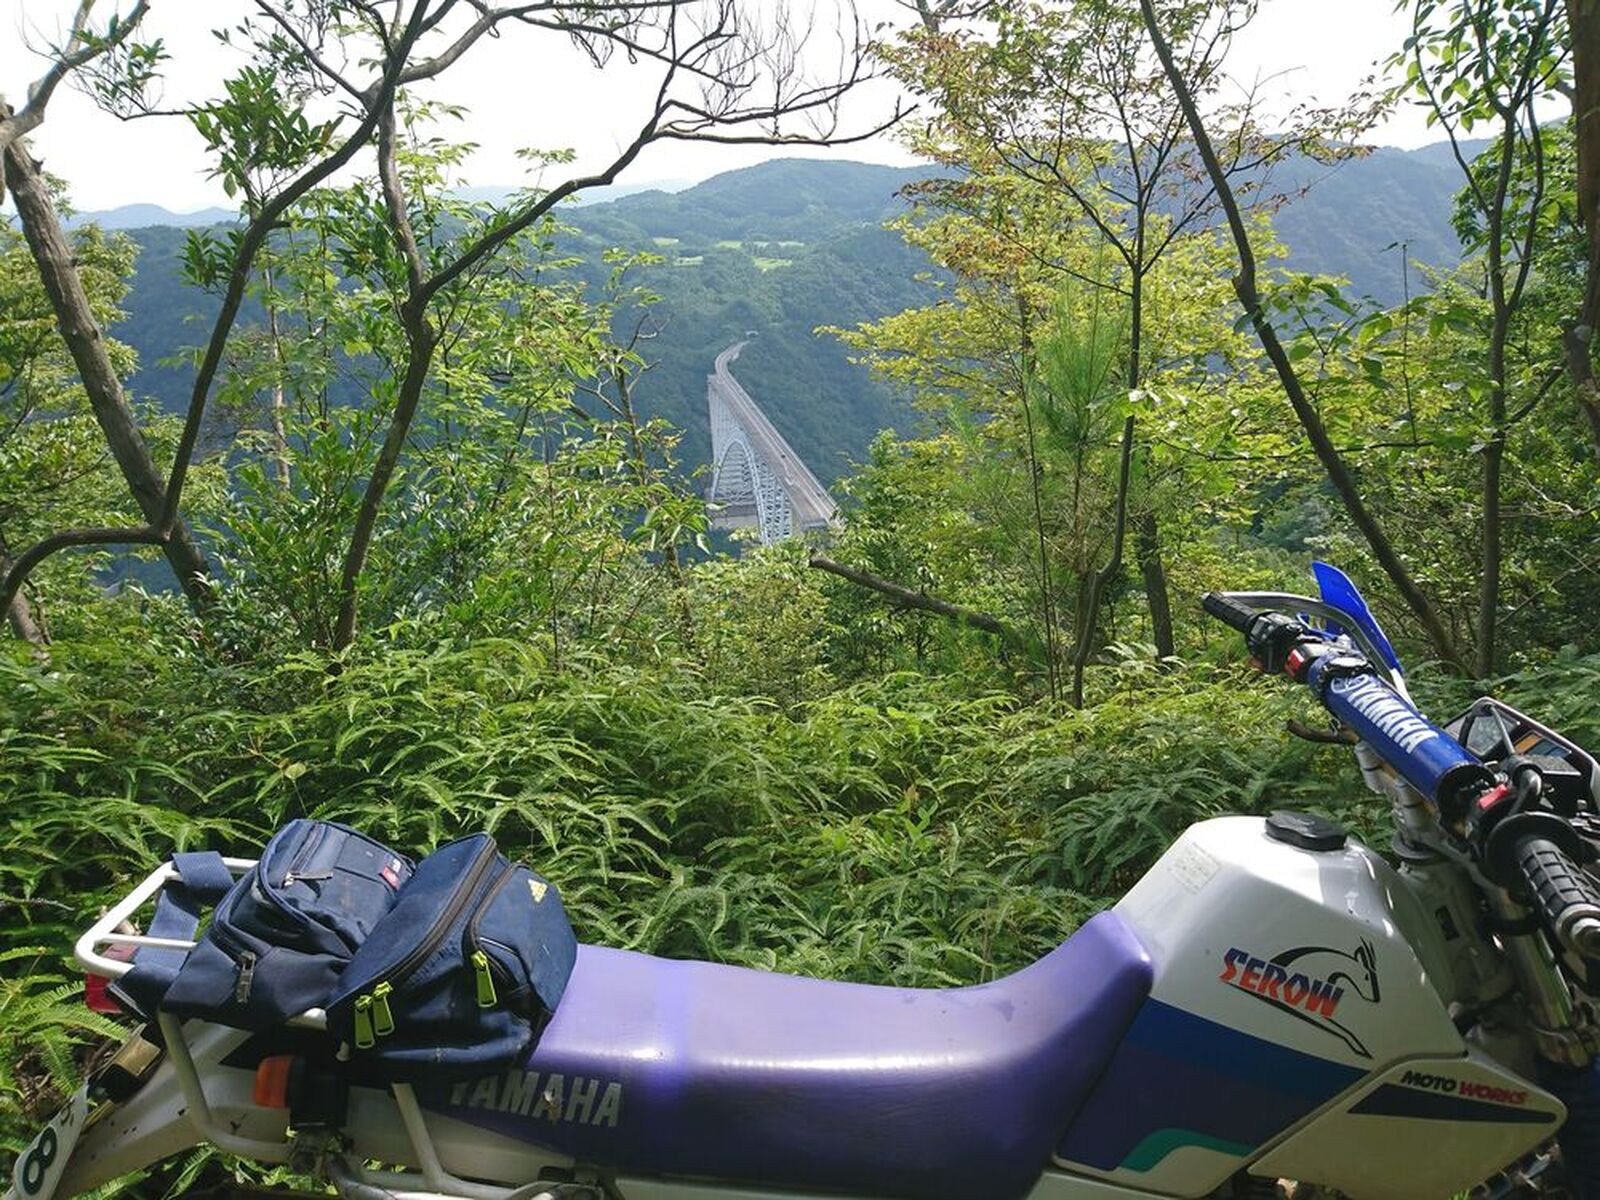 Yamaha セロー225w 225w 白竜湖あたりの山を巡る ウェビックコミュニティ